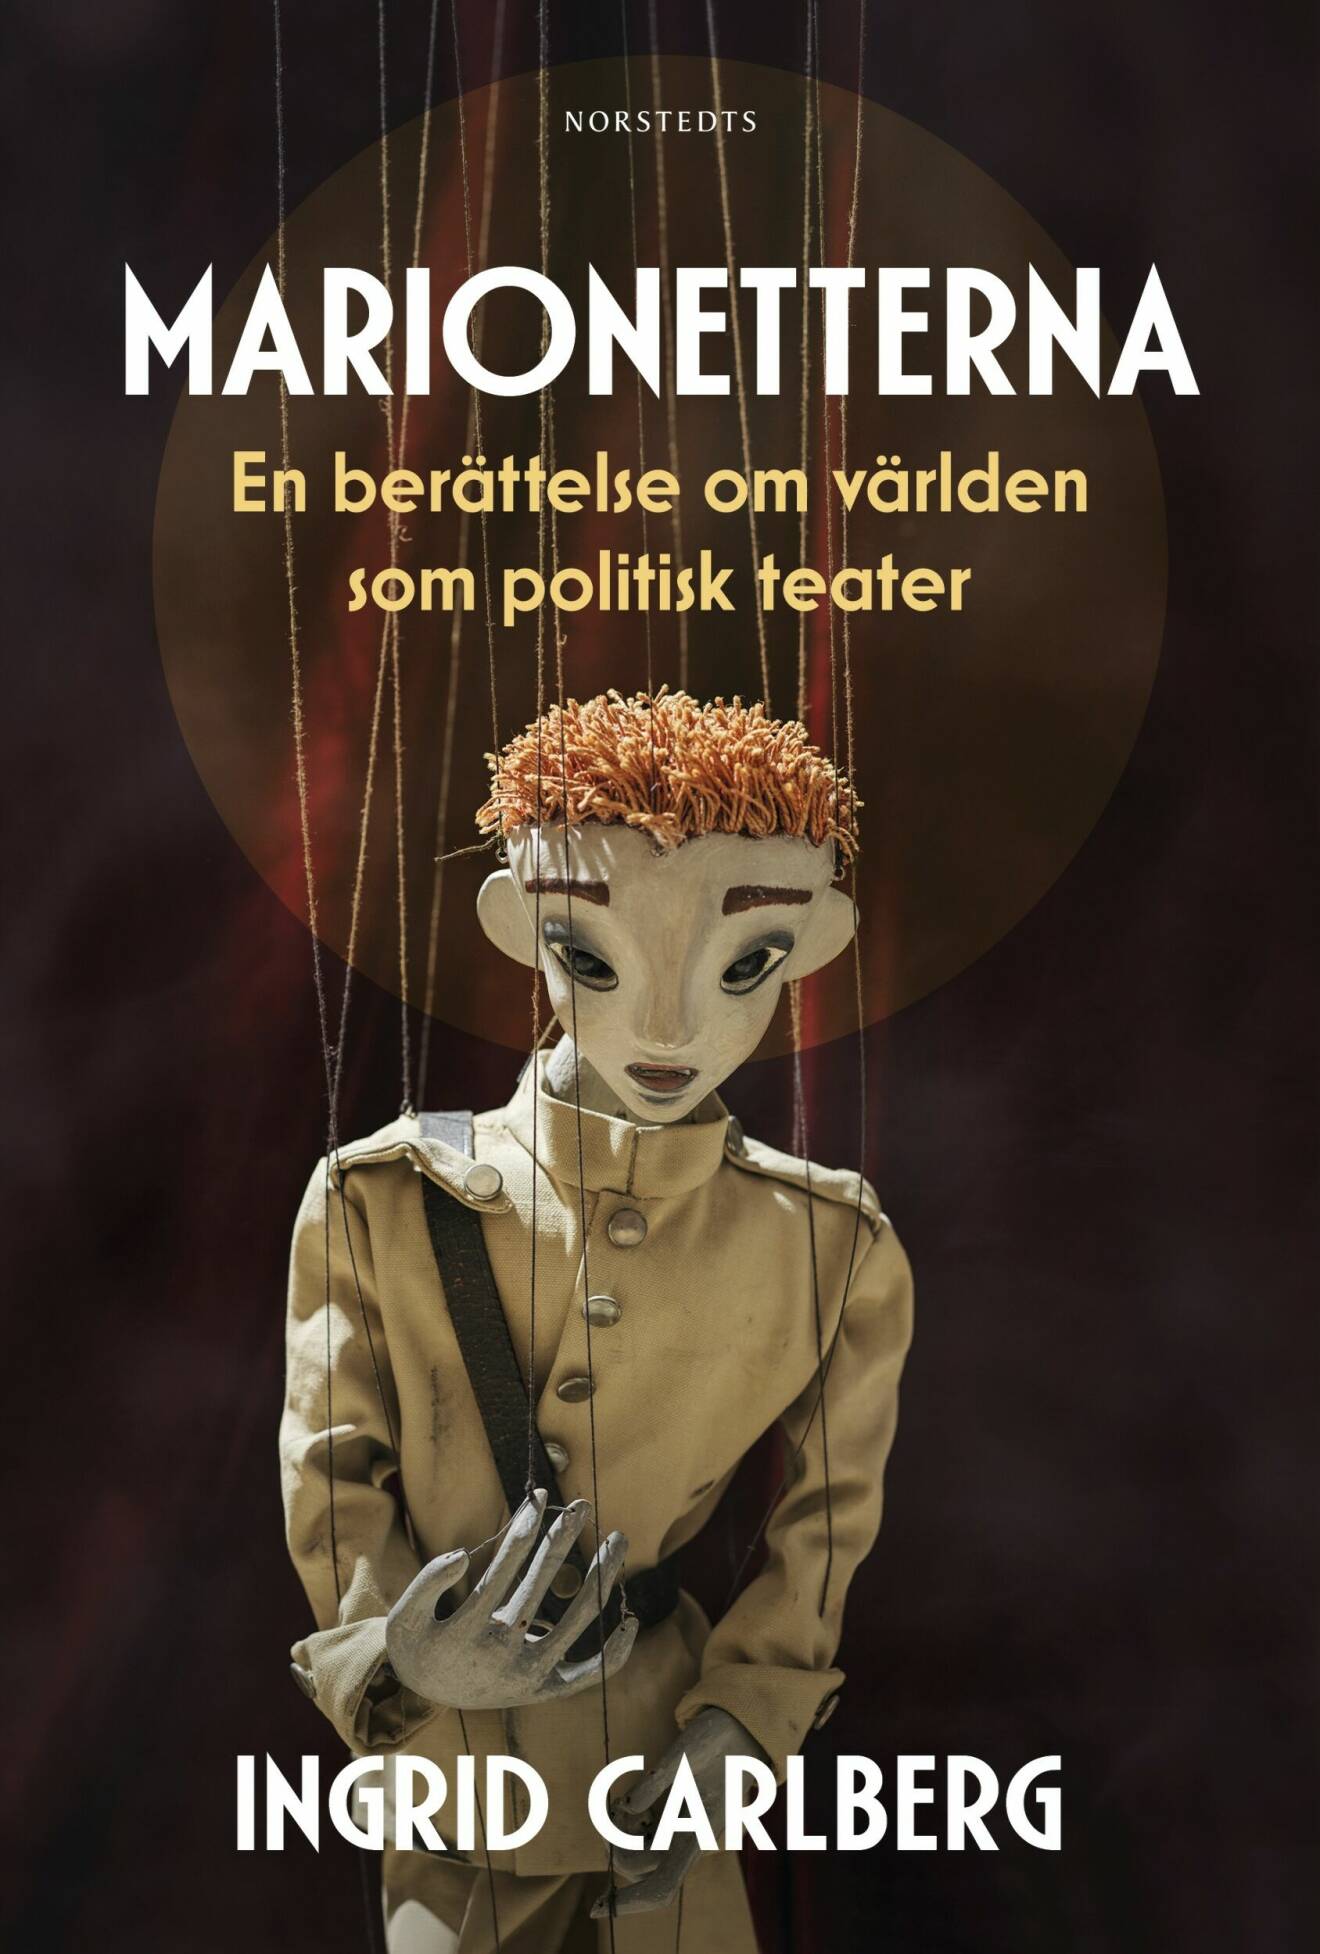 Marionetterna av Ingrid Carlberg (Nordstedts).